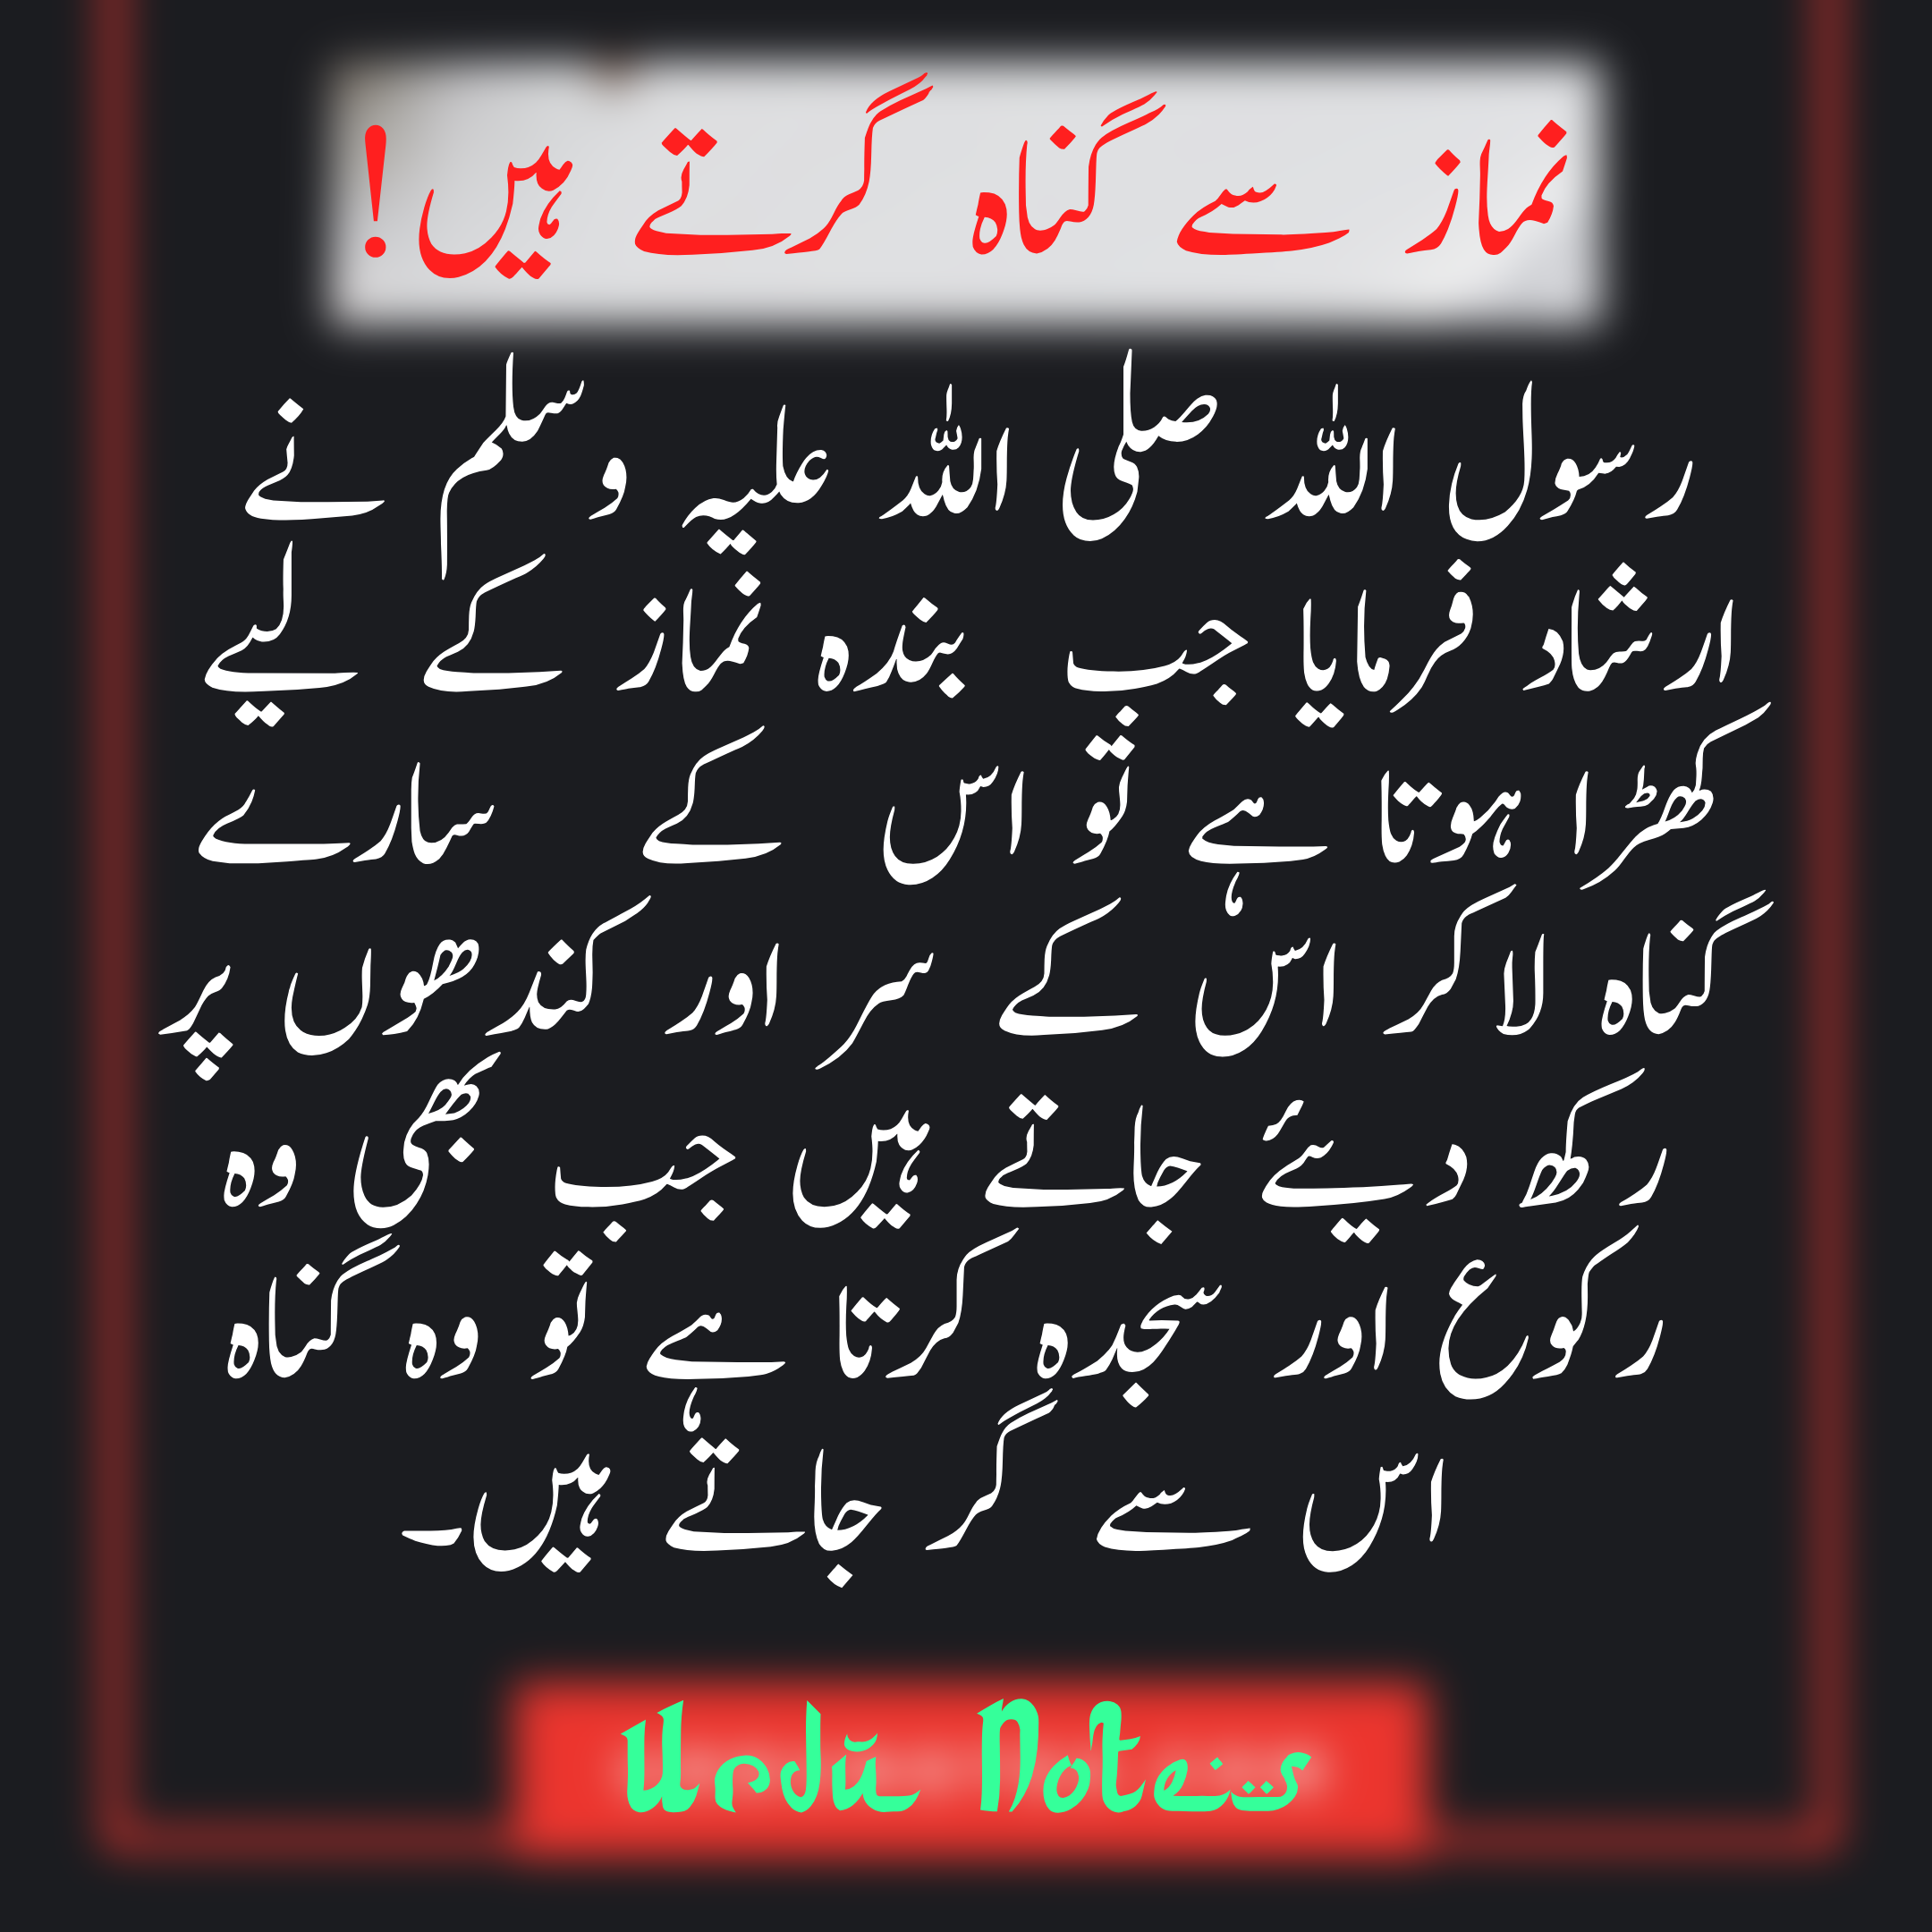 Namaz Notes In Urdu - 5uhwa23erf1